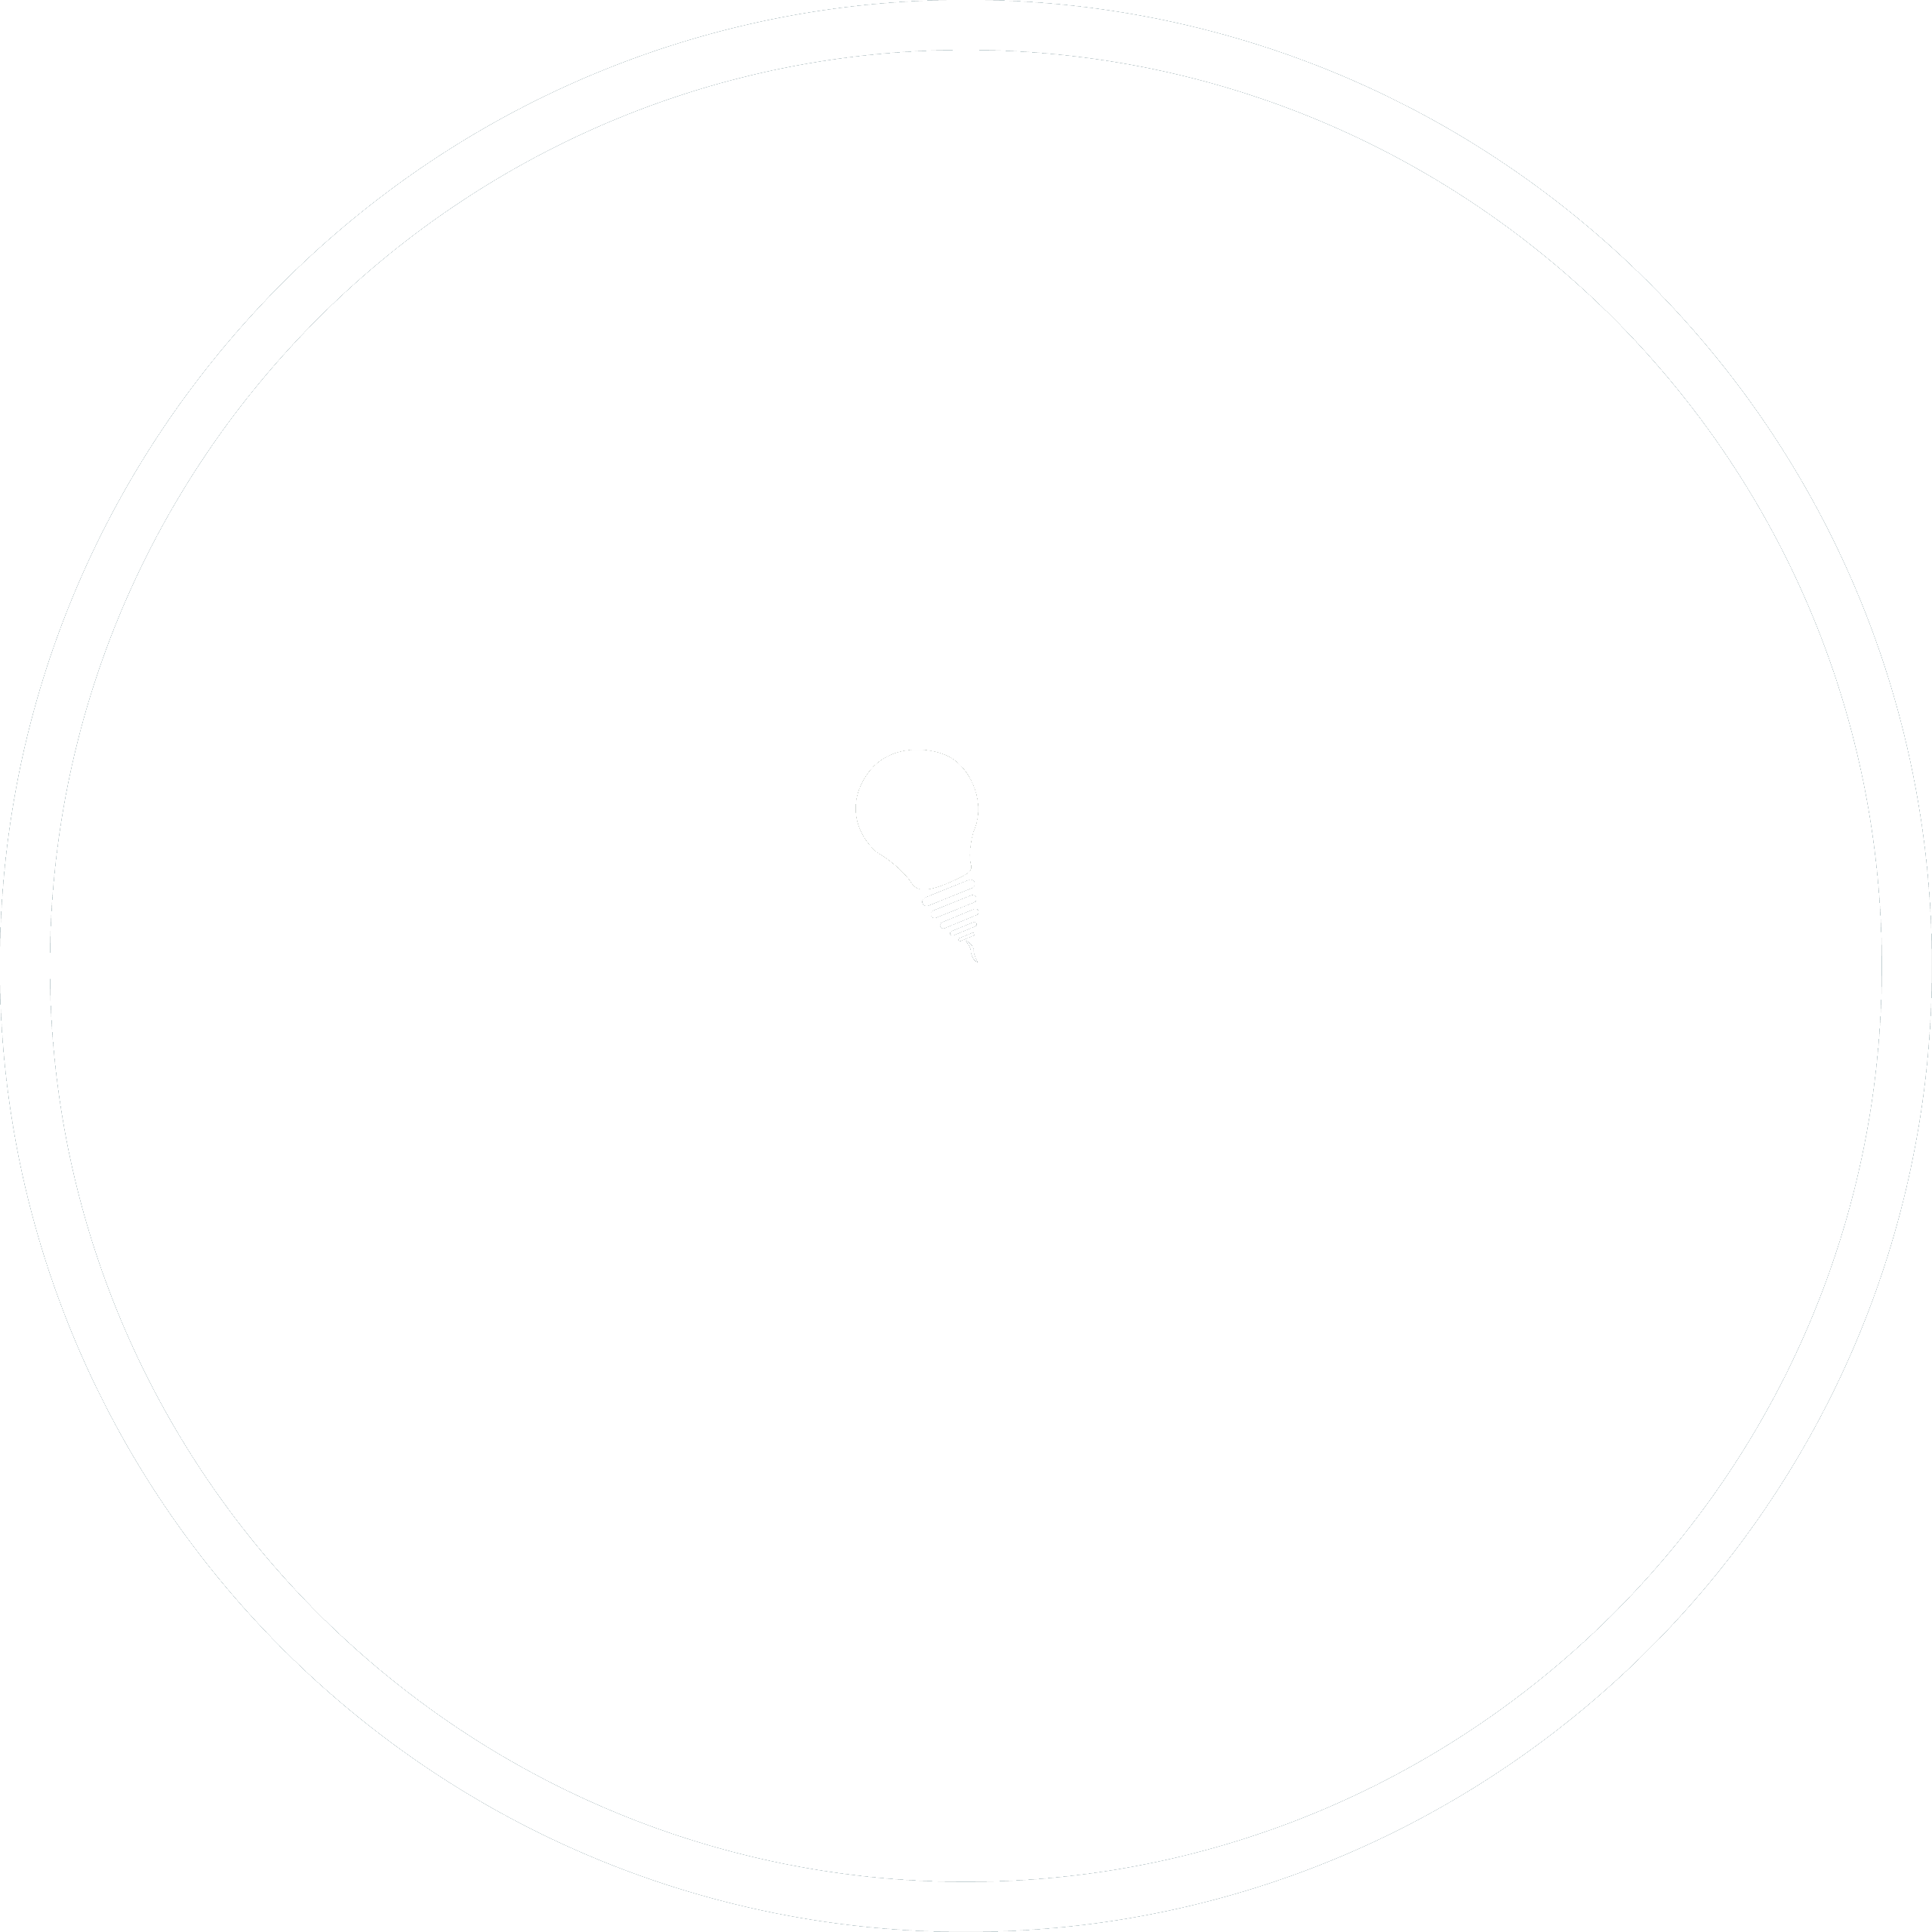 Tim Logo - T.I.M. - Blog